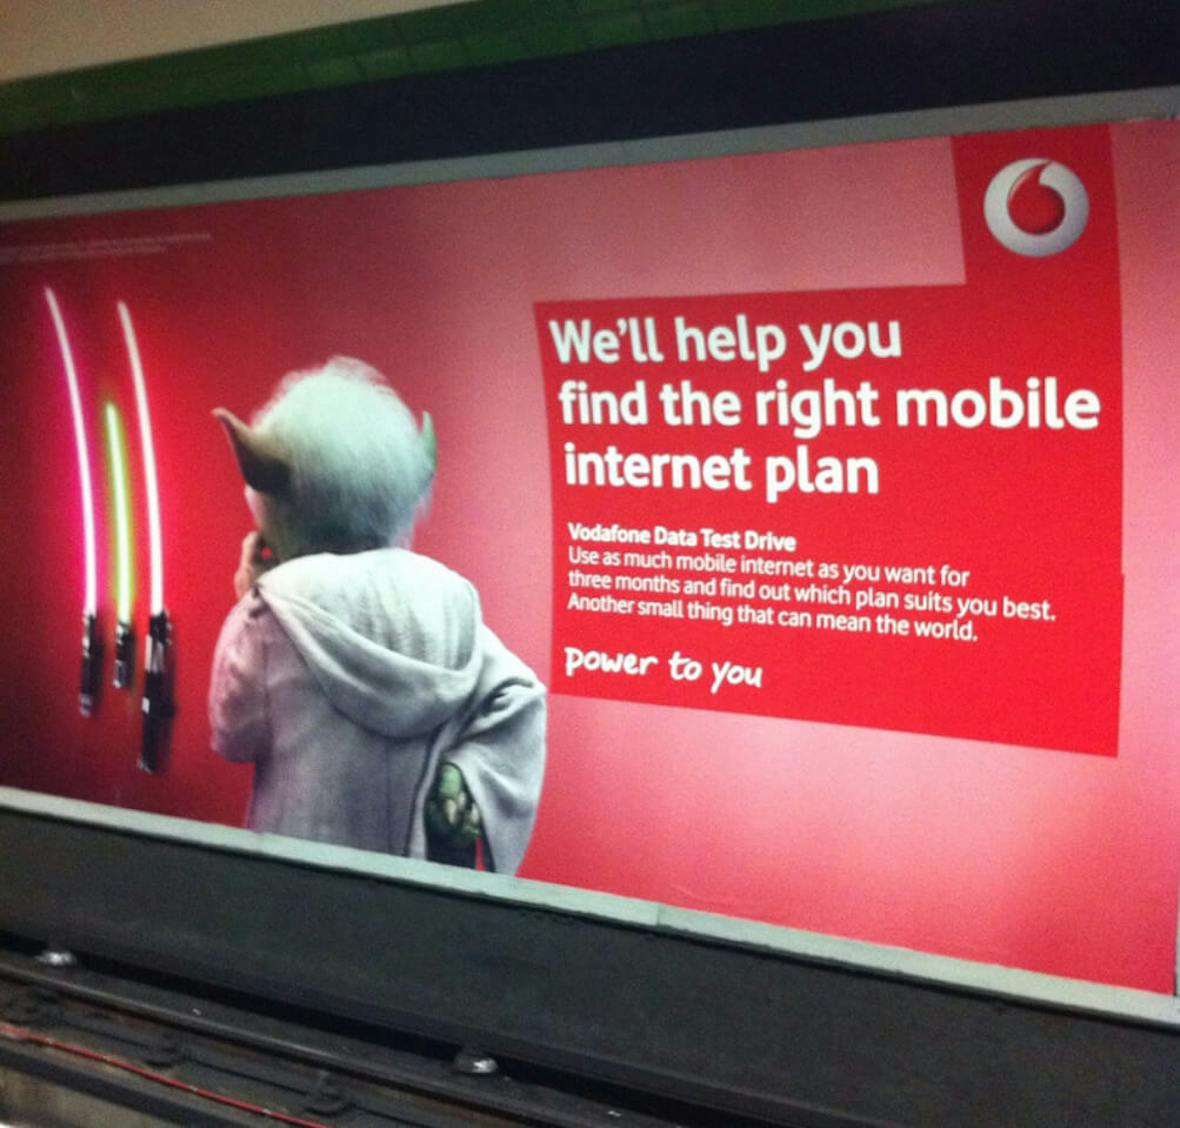 Vodafone finds solution in Australia